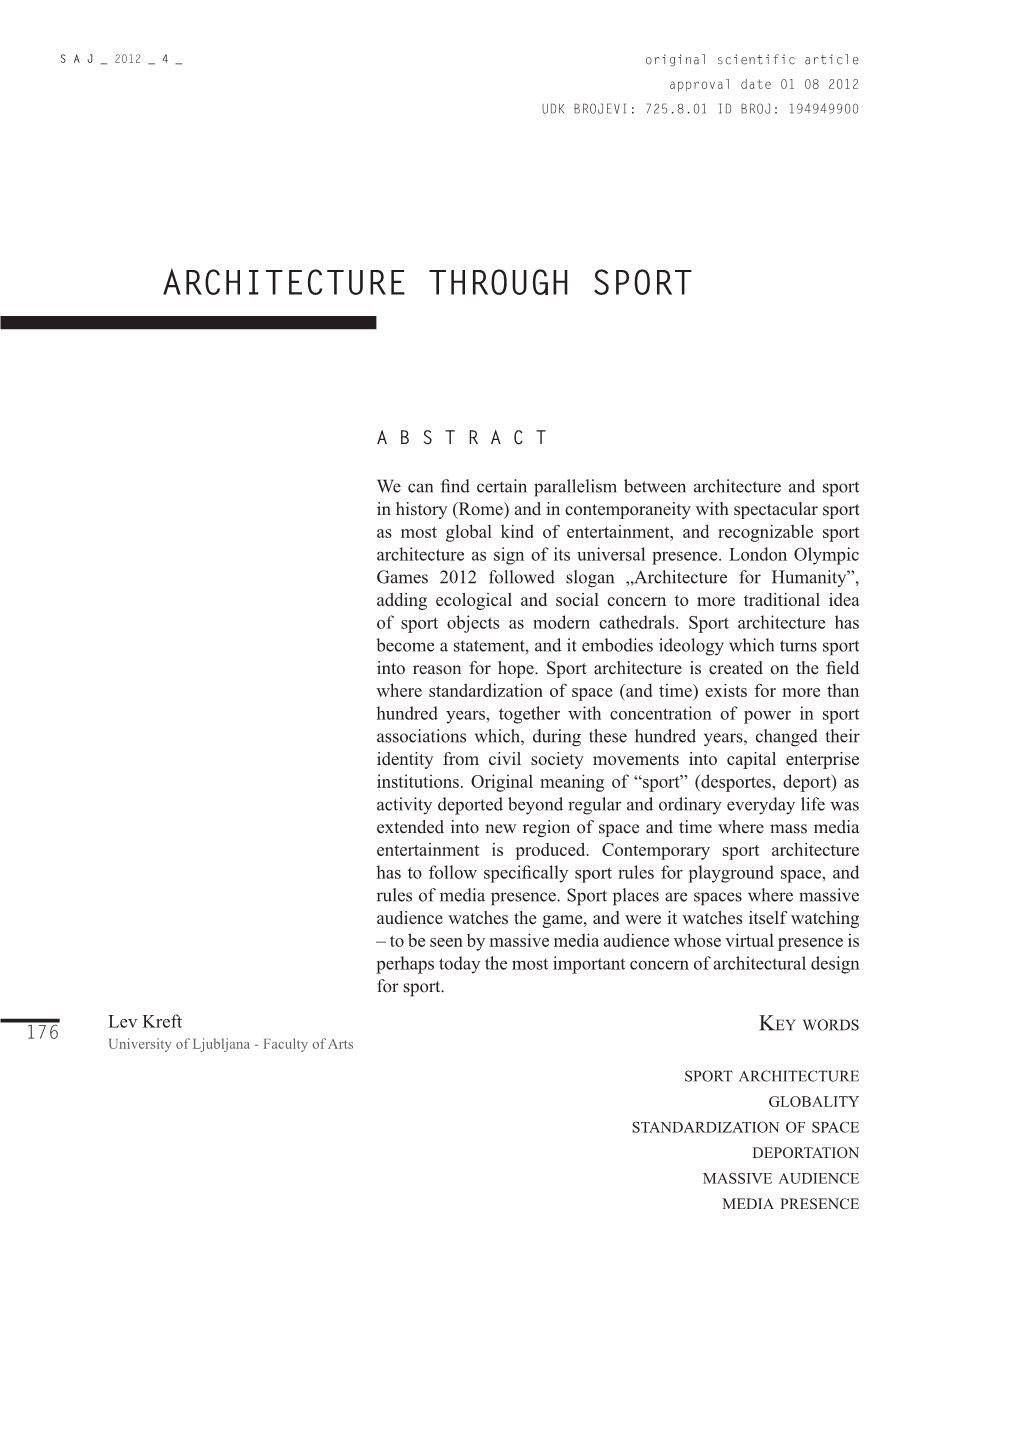 Architecture Through Sport